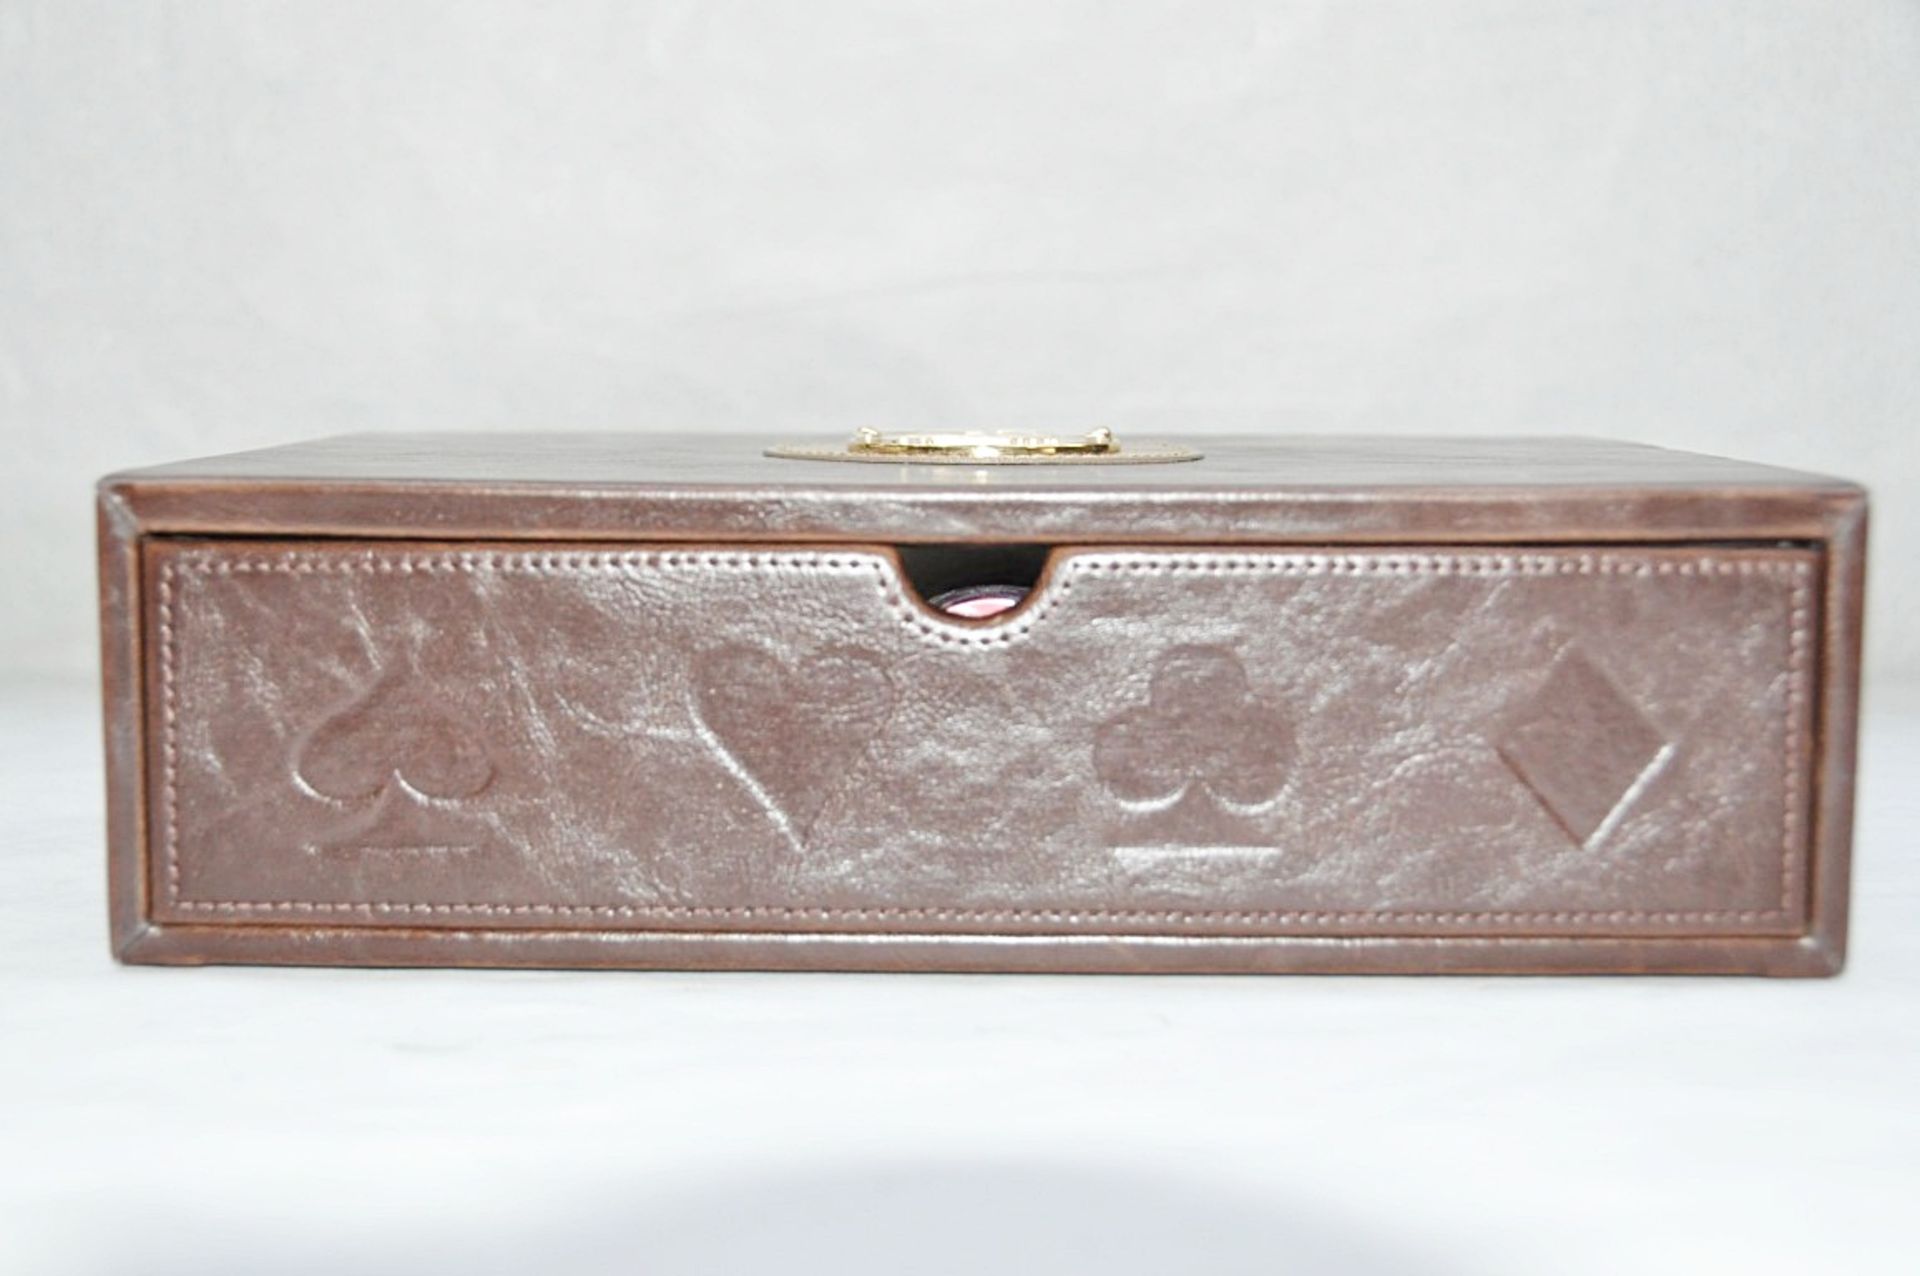 1 x "AB Collezioni" Italian Genuine Leather-Bound Luxury POKER SET (34048) - Ref LT003 - Features - Image 6 of 8